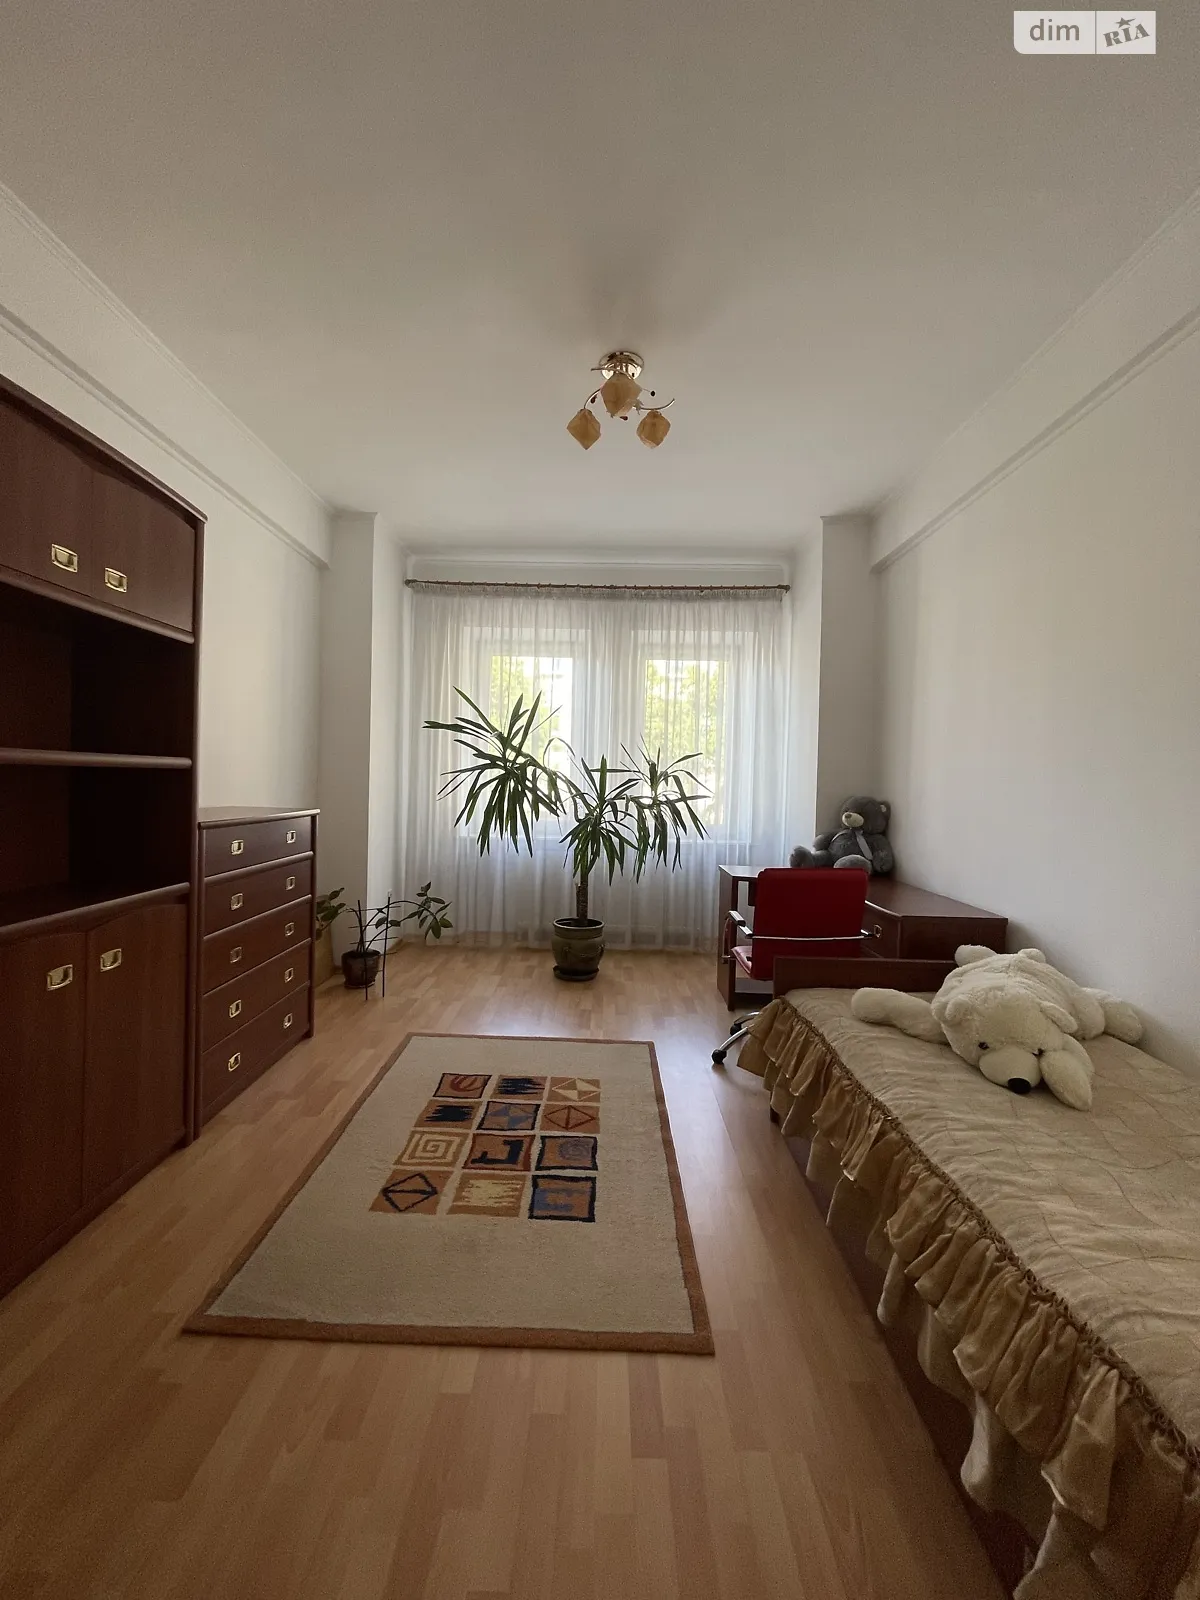 Сдается в аренду 3-комнатная квартира 100 кв. м в Ровно - фото 2